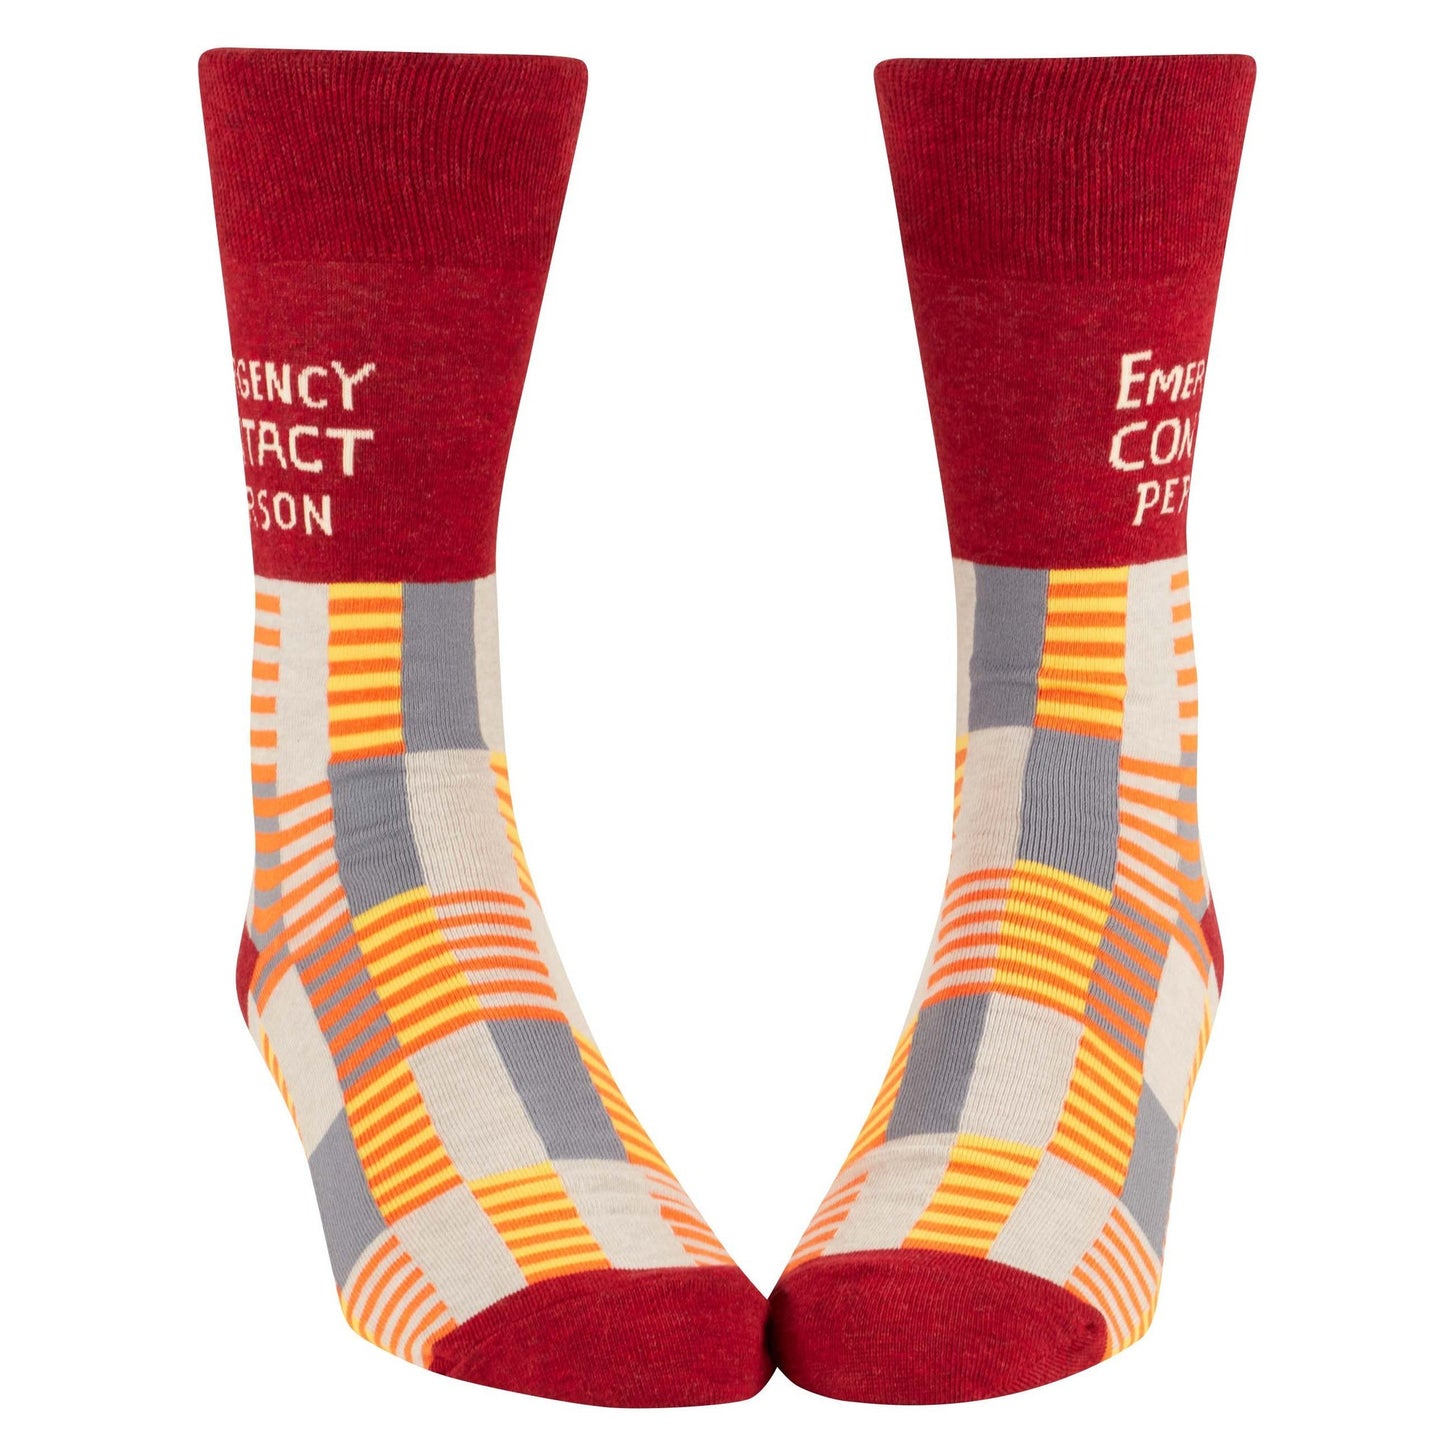 Emergency Contact Person Men's Crew Socks | Funny Text Novelty Socks